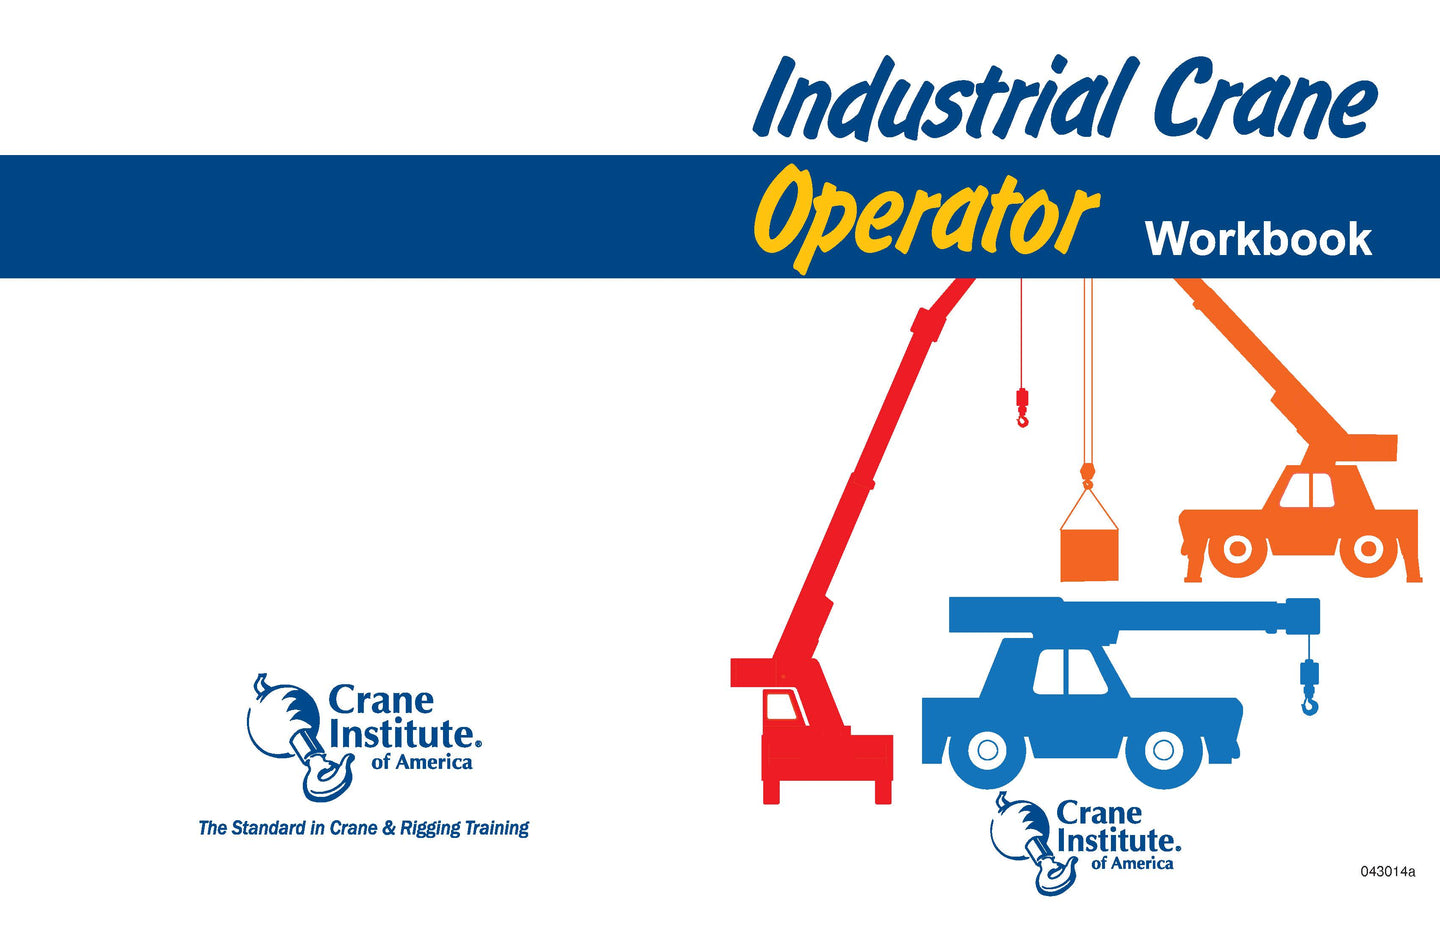 Industrial Crane Operator Workbook